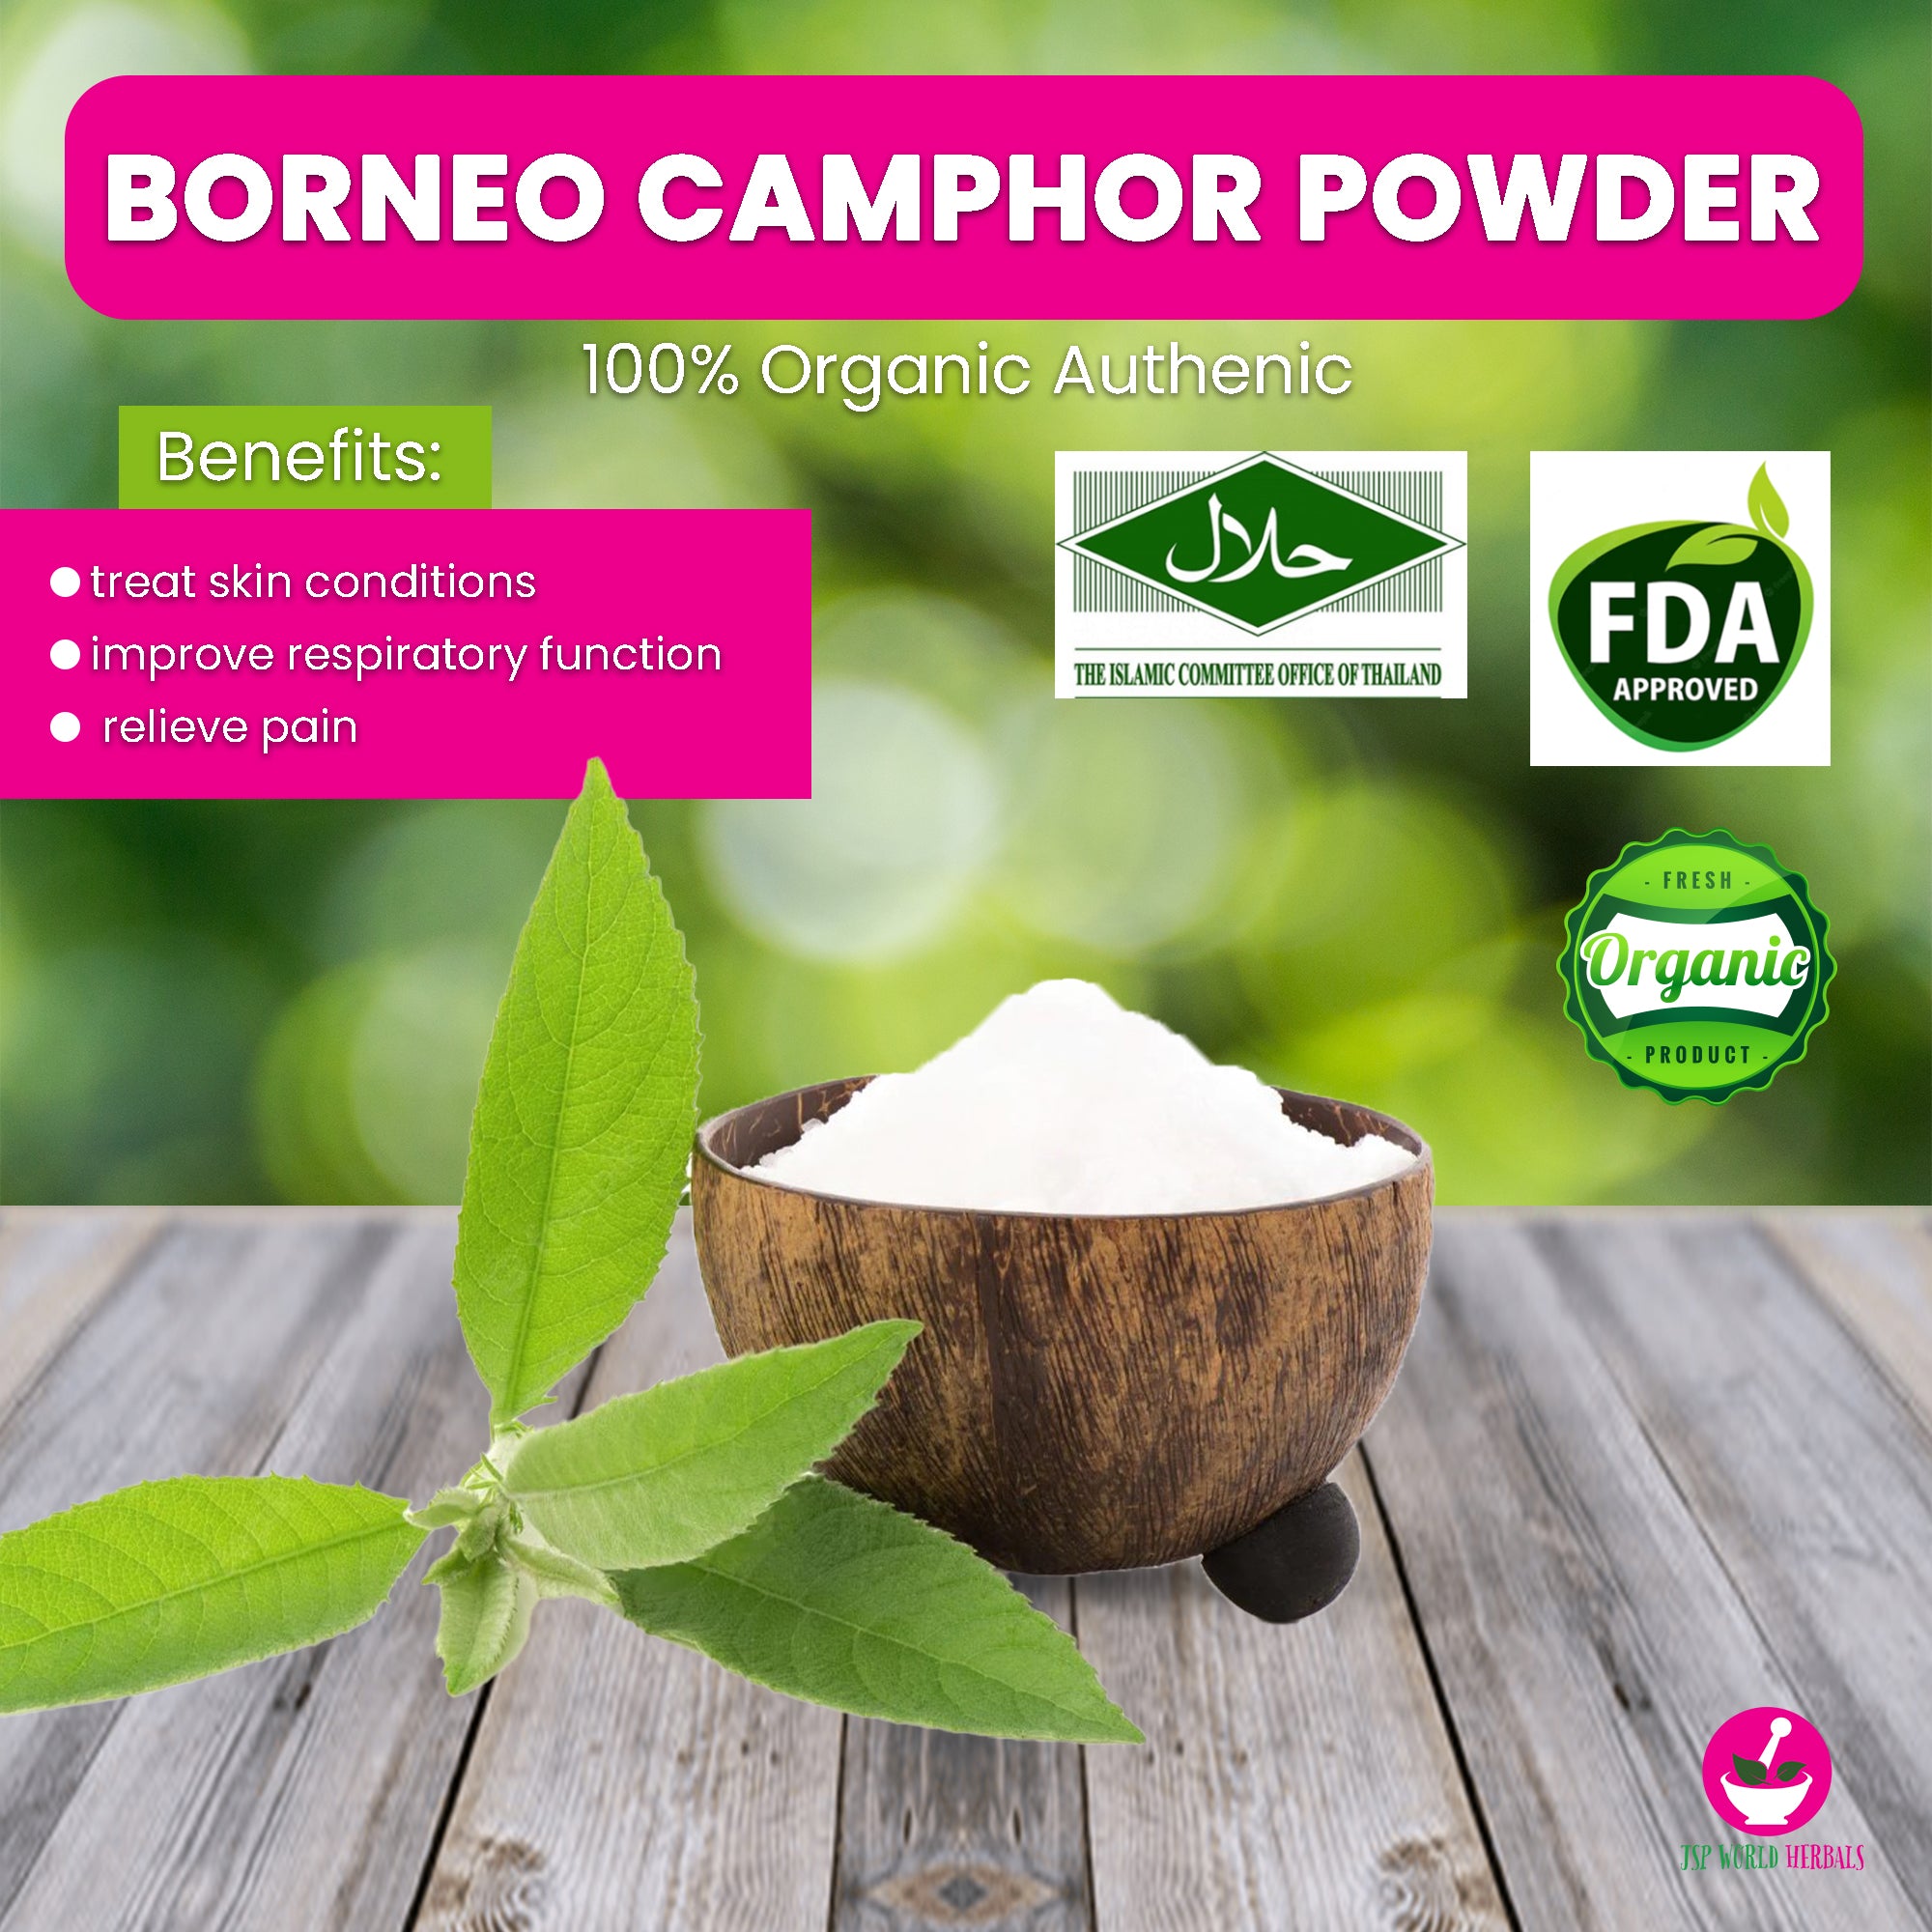 Borneo Camphor Powder